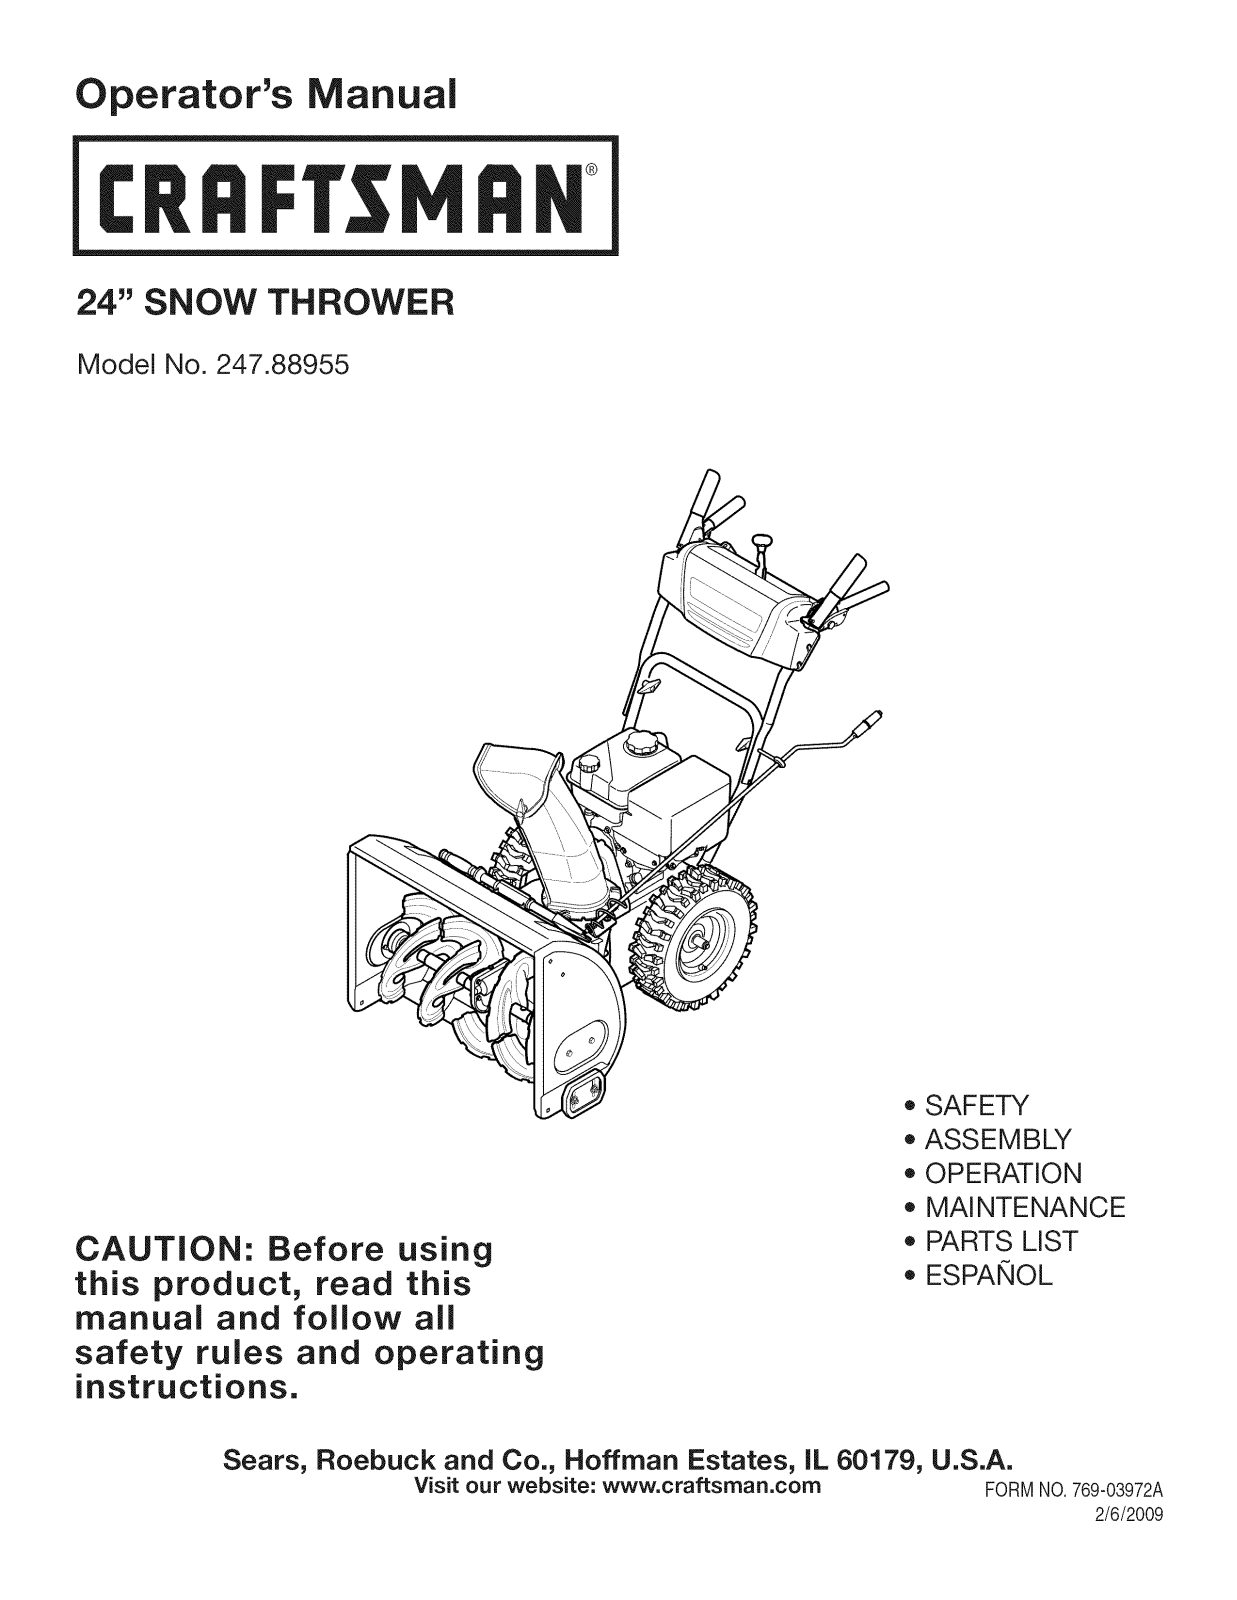 Craftsman 247889550 Owner’s Manual